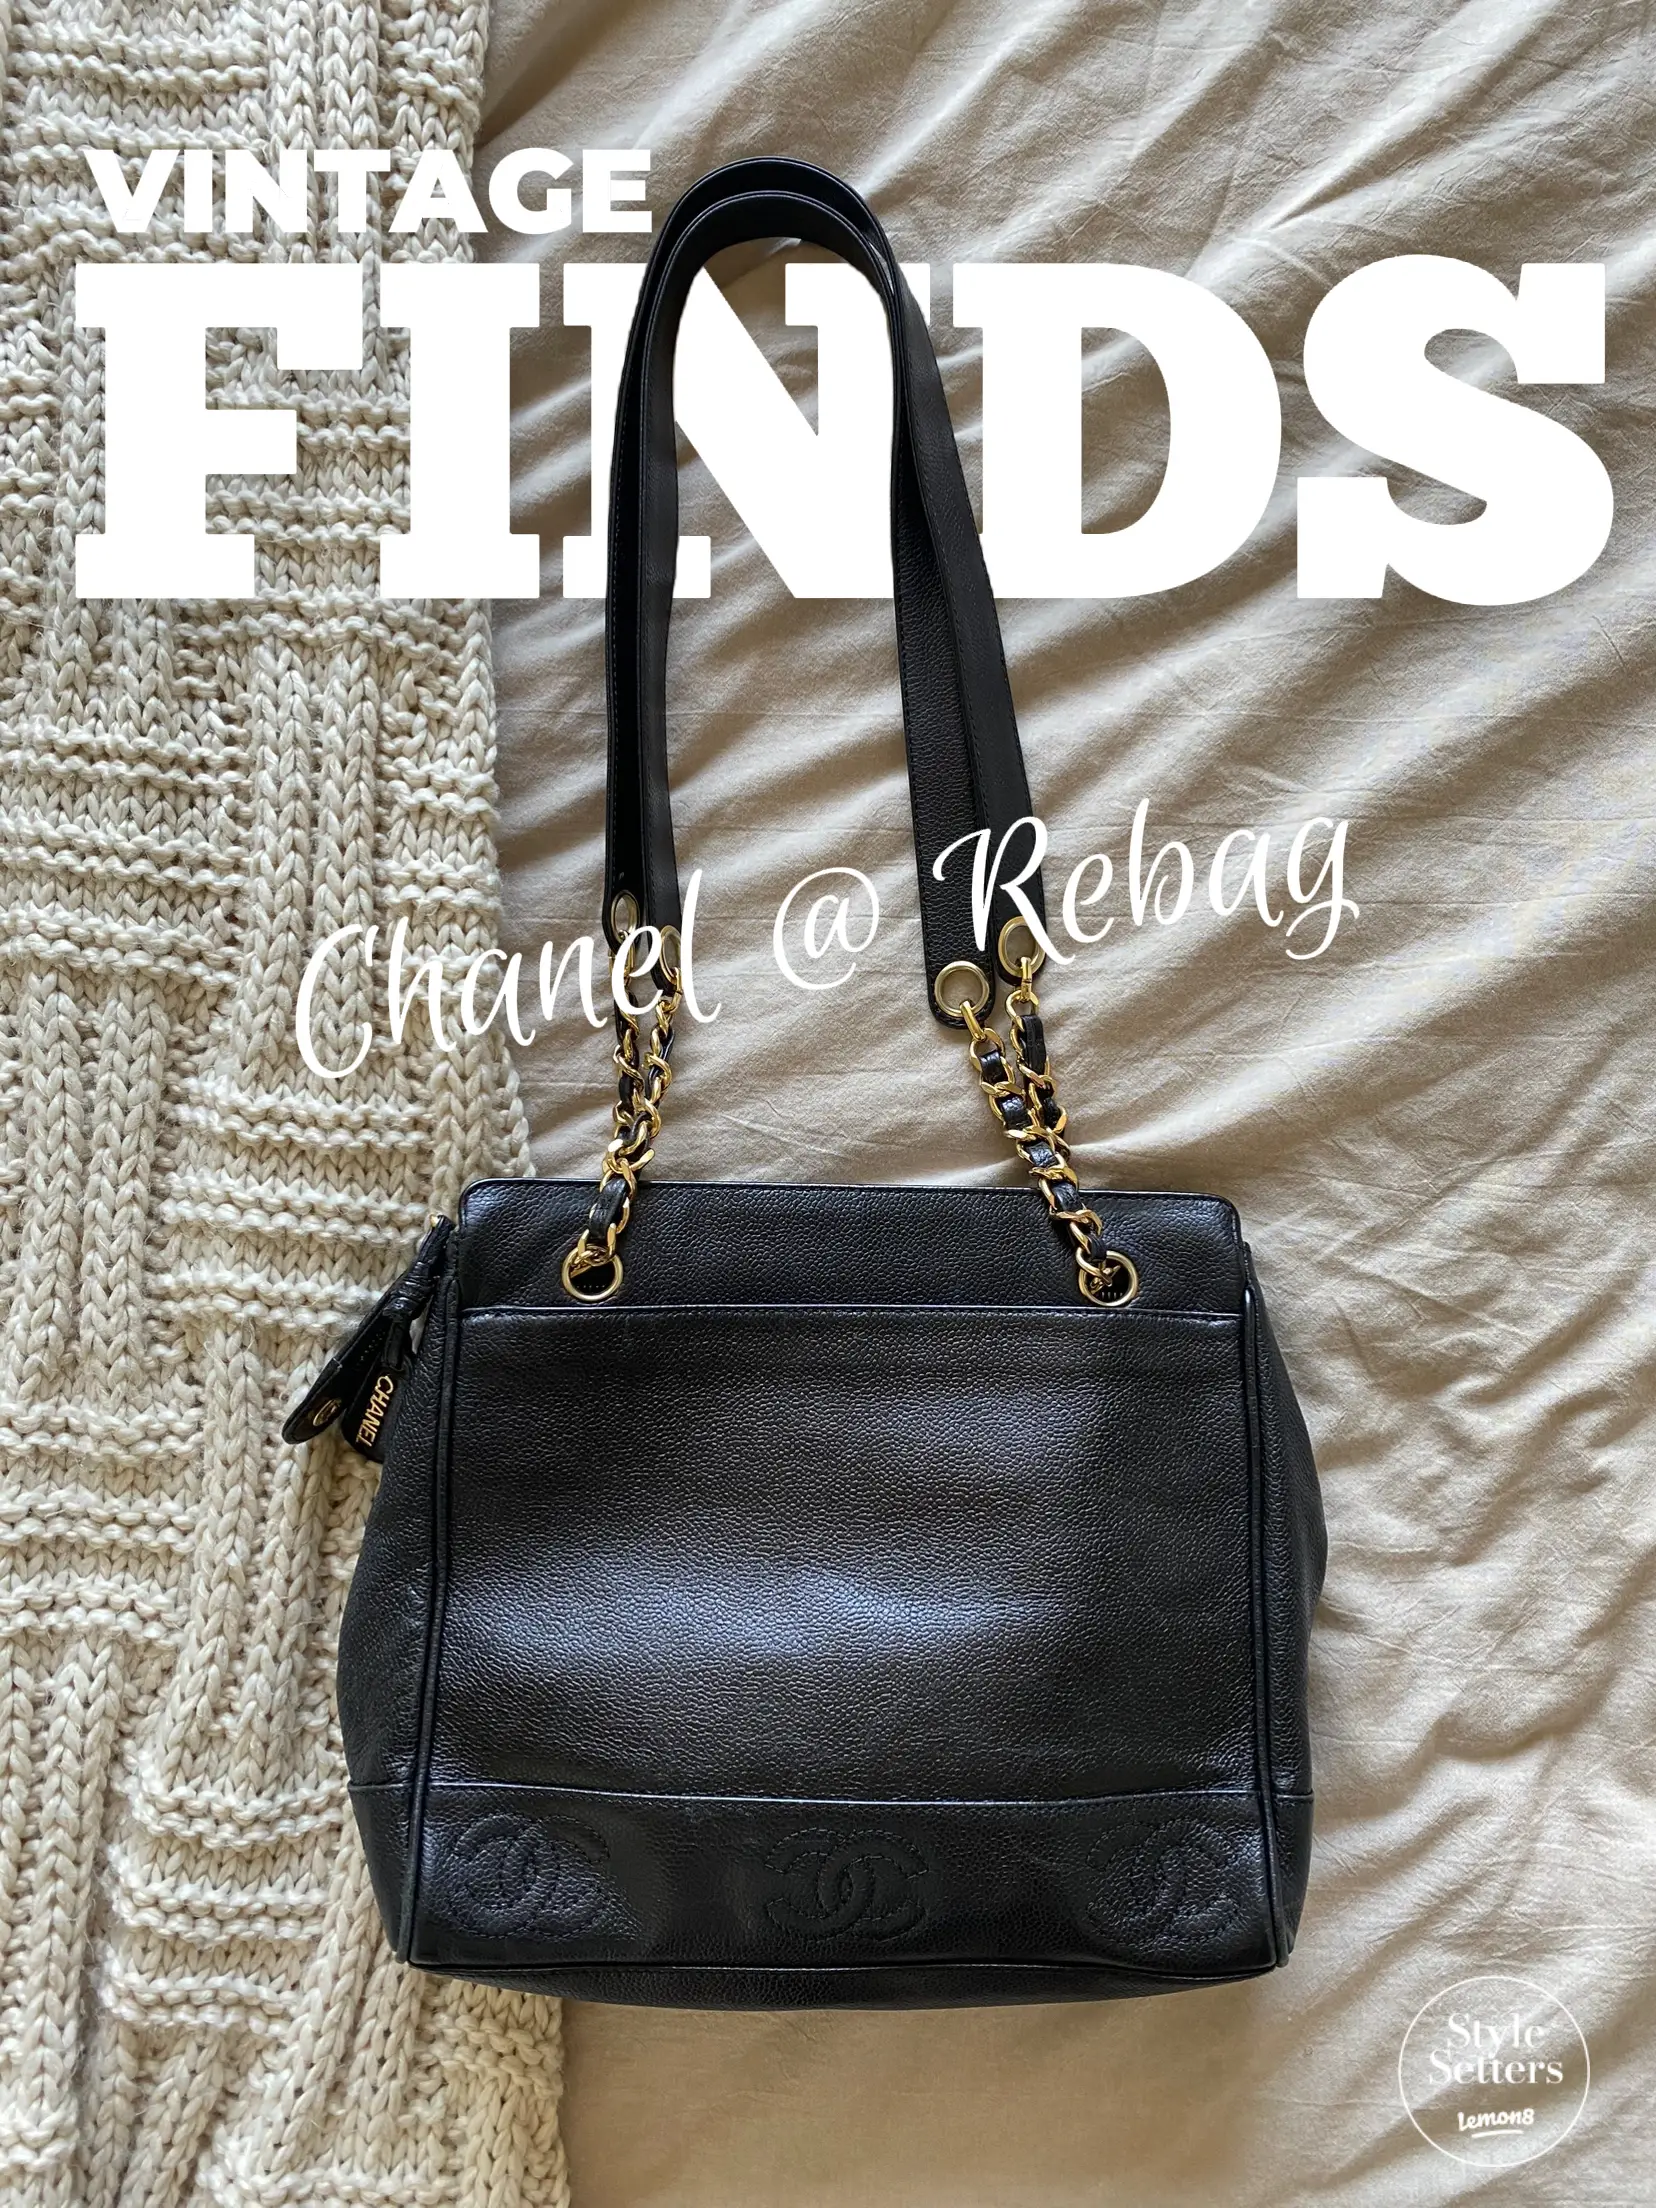 Rebag Chanel Bag Review: Timeless Elegance